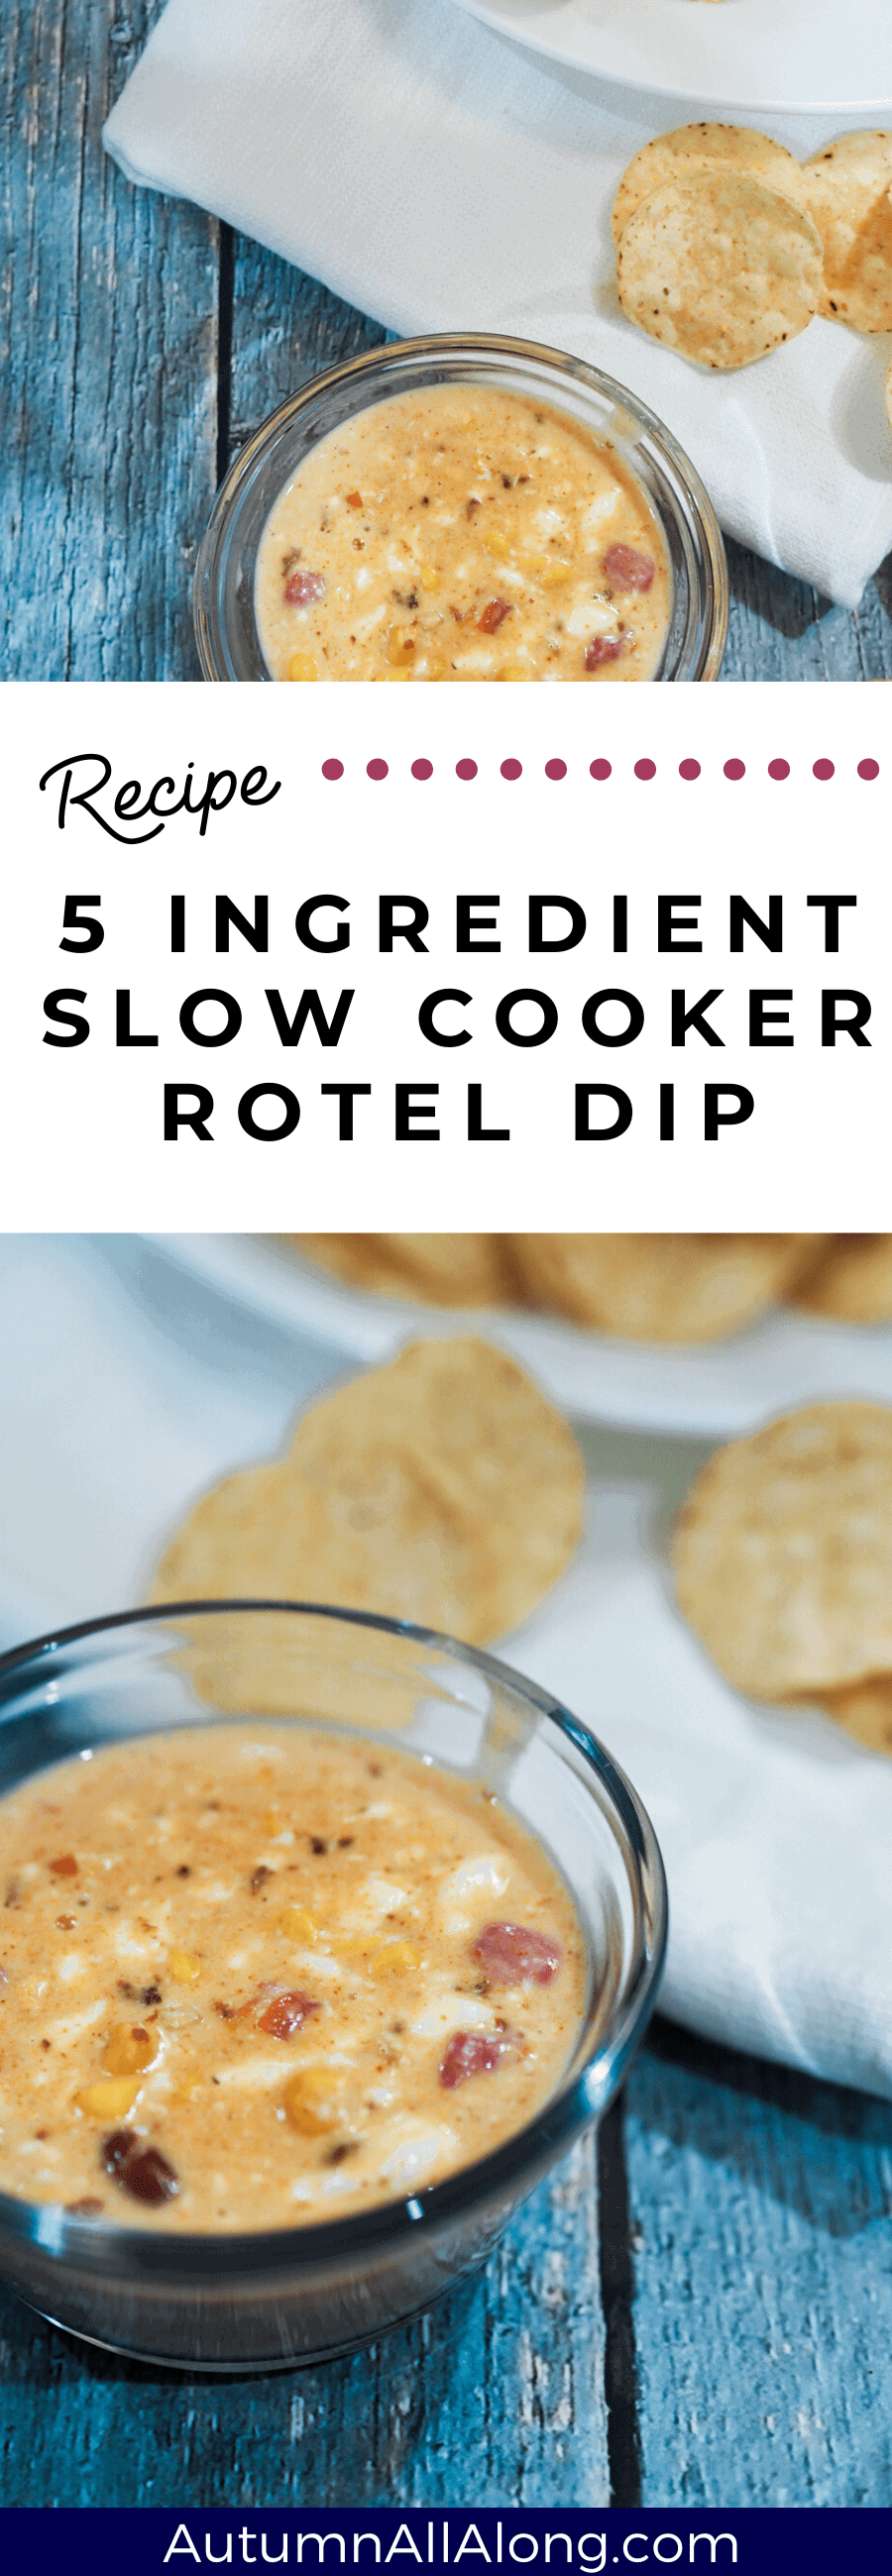 mini slow cooker recipe  5 ingredient slow cooker rotel dip